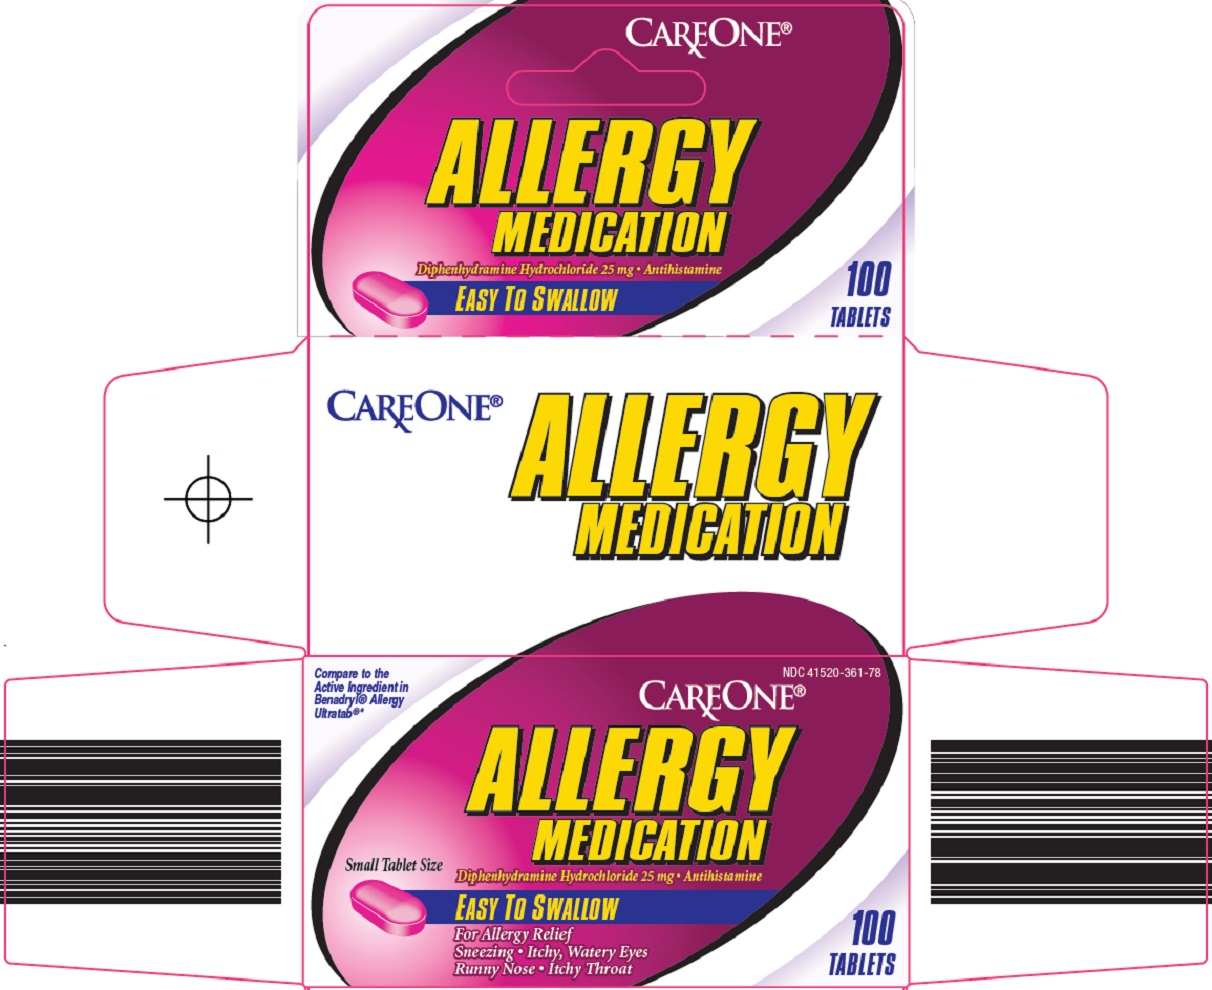 CareOne Allergy Medication Image 1